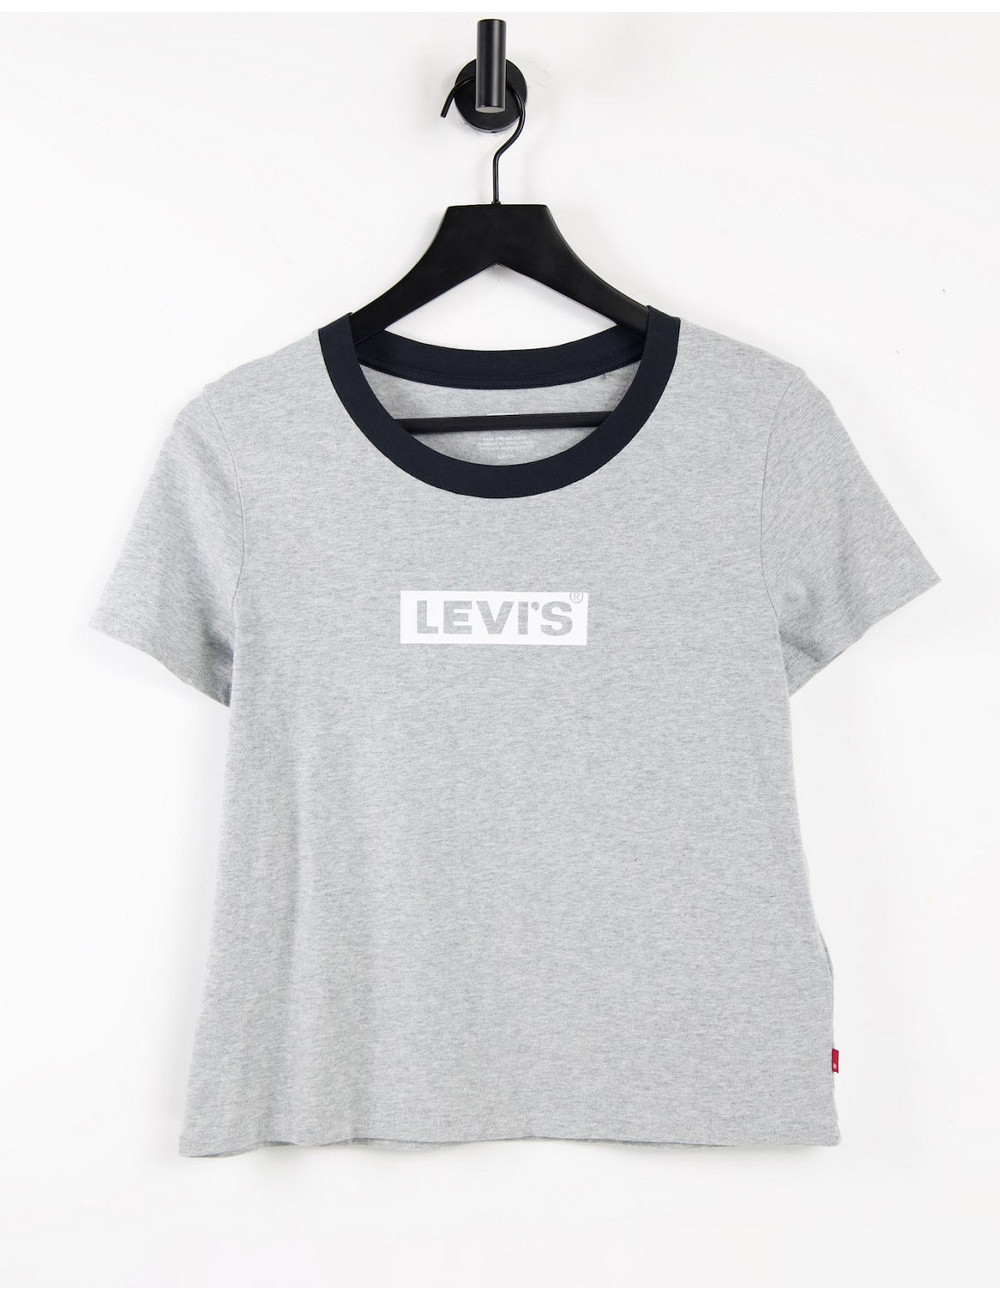 Levi's logo ringer tee in grey